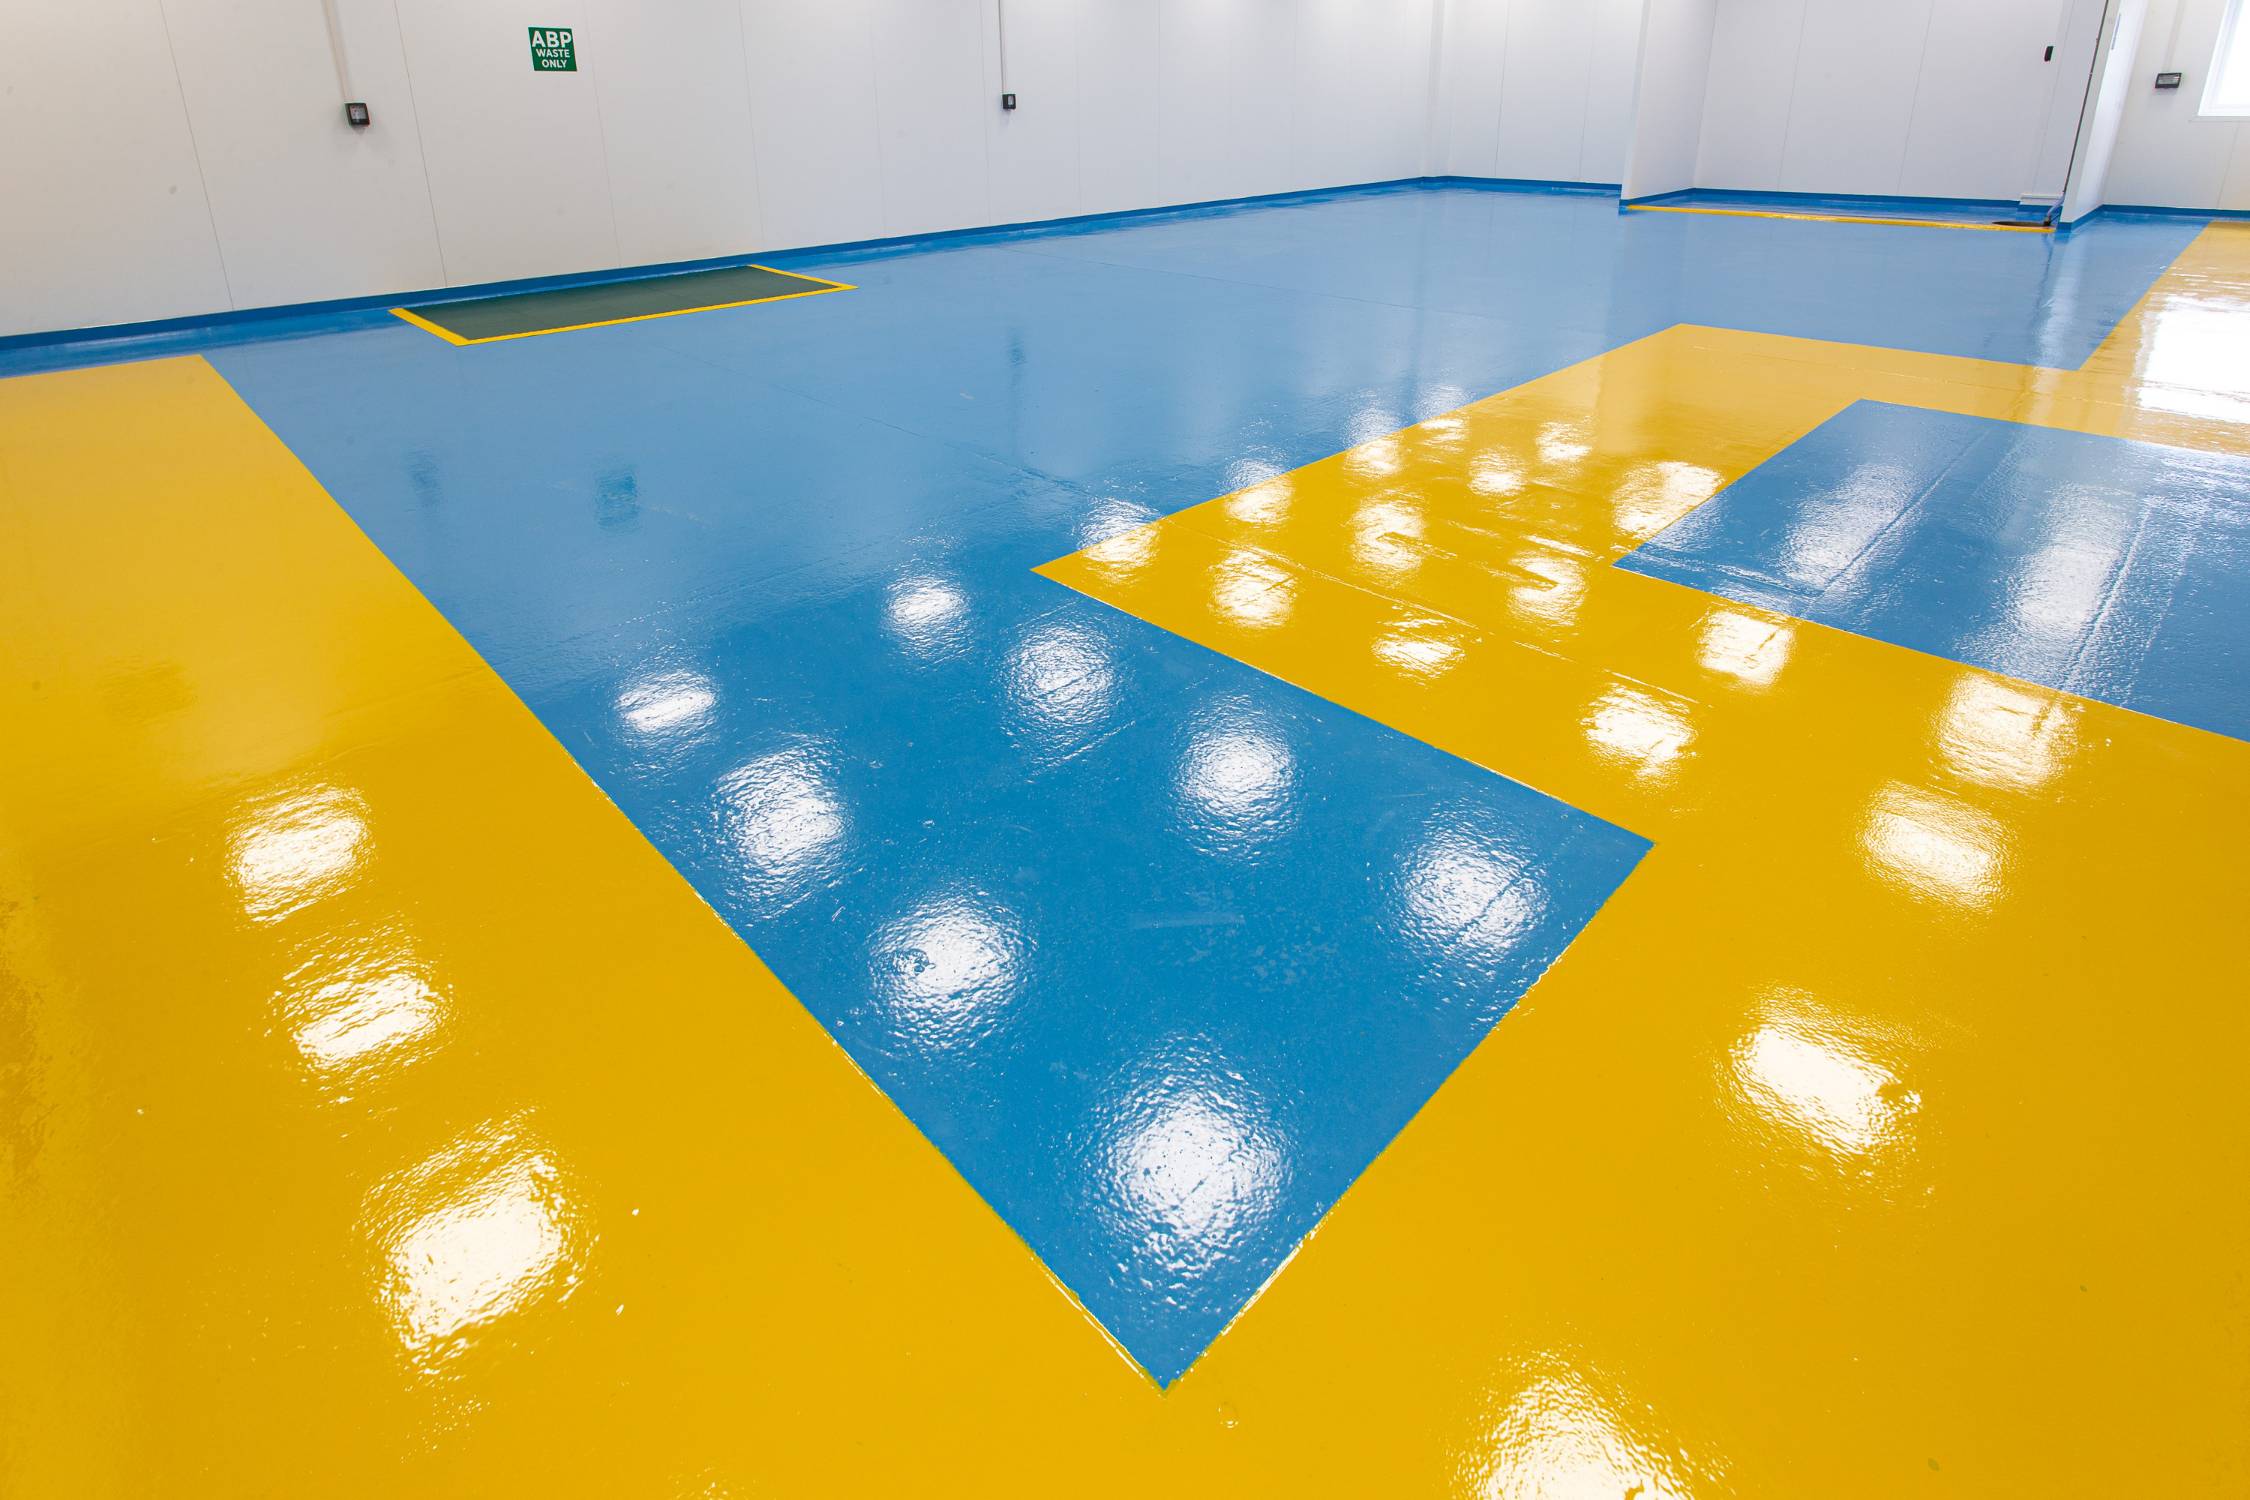 Vubacoat HB Resin Flooring - Epoxy Floor Coating